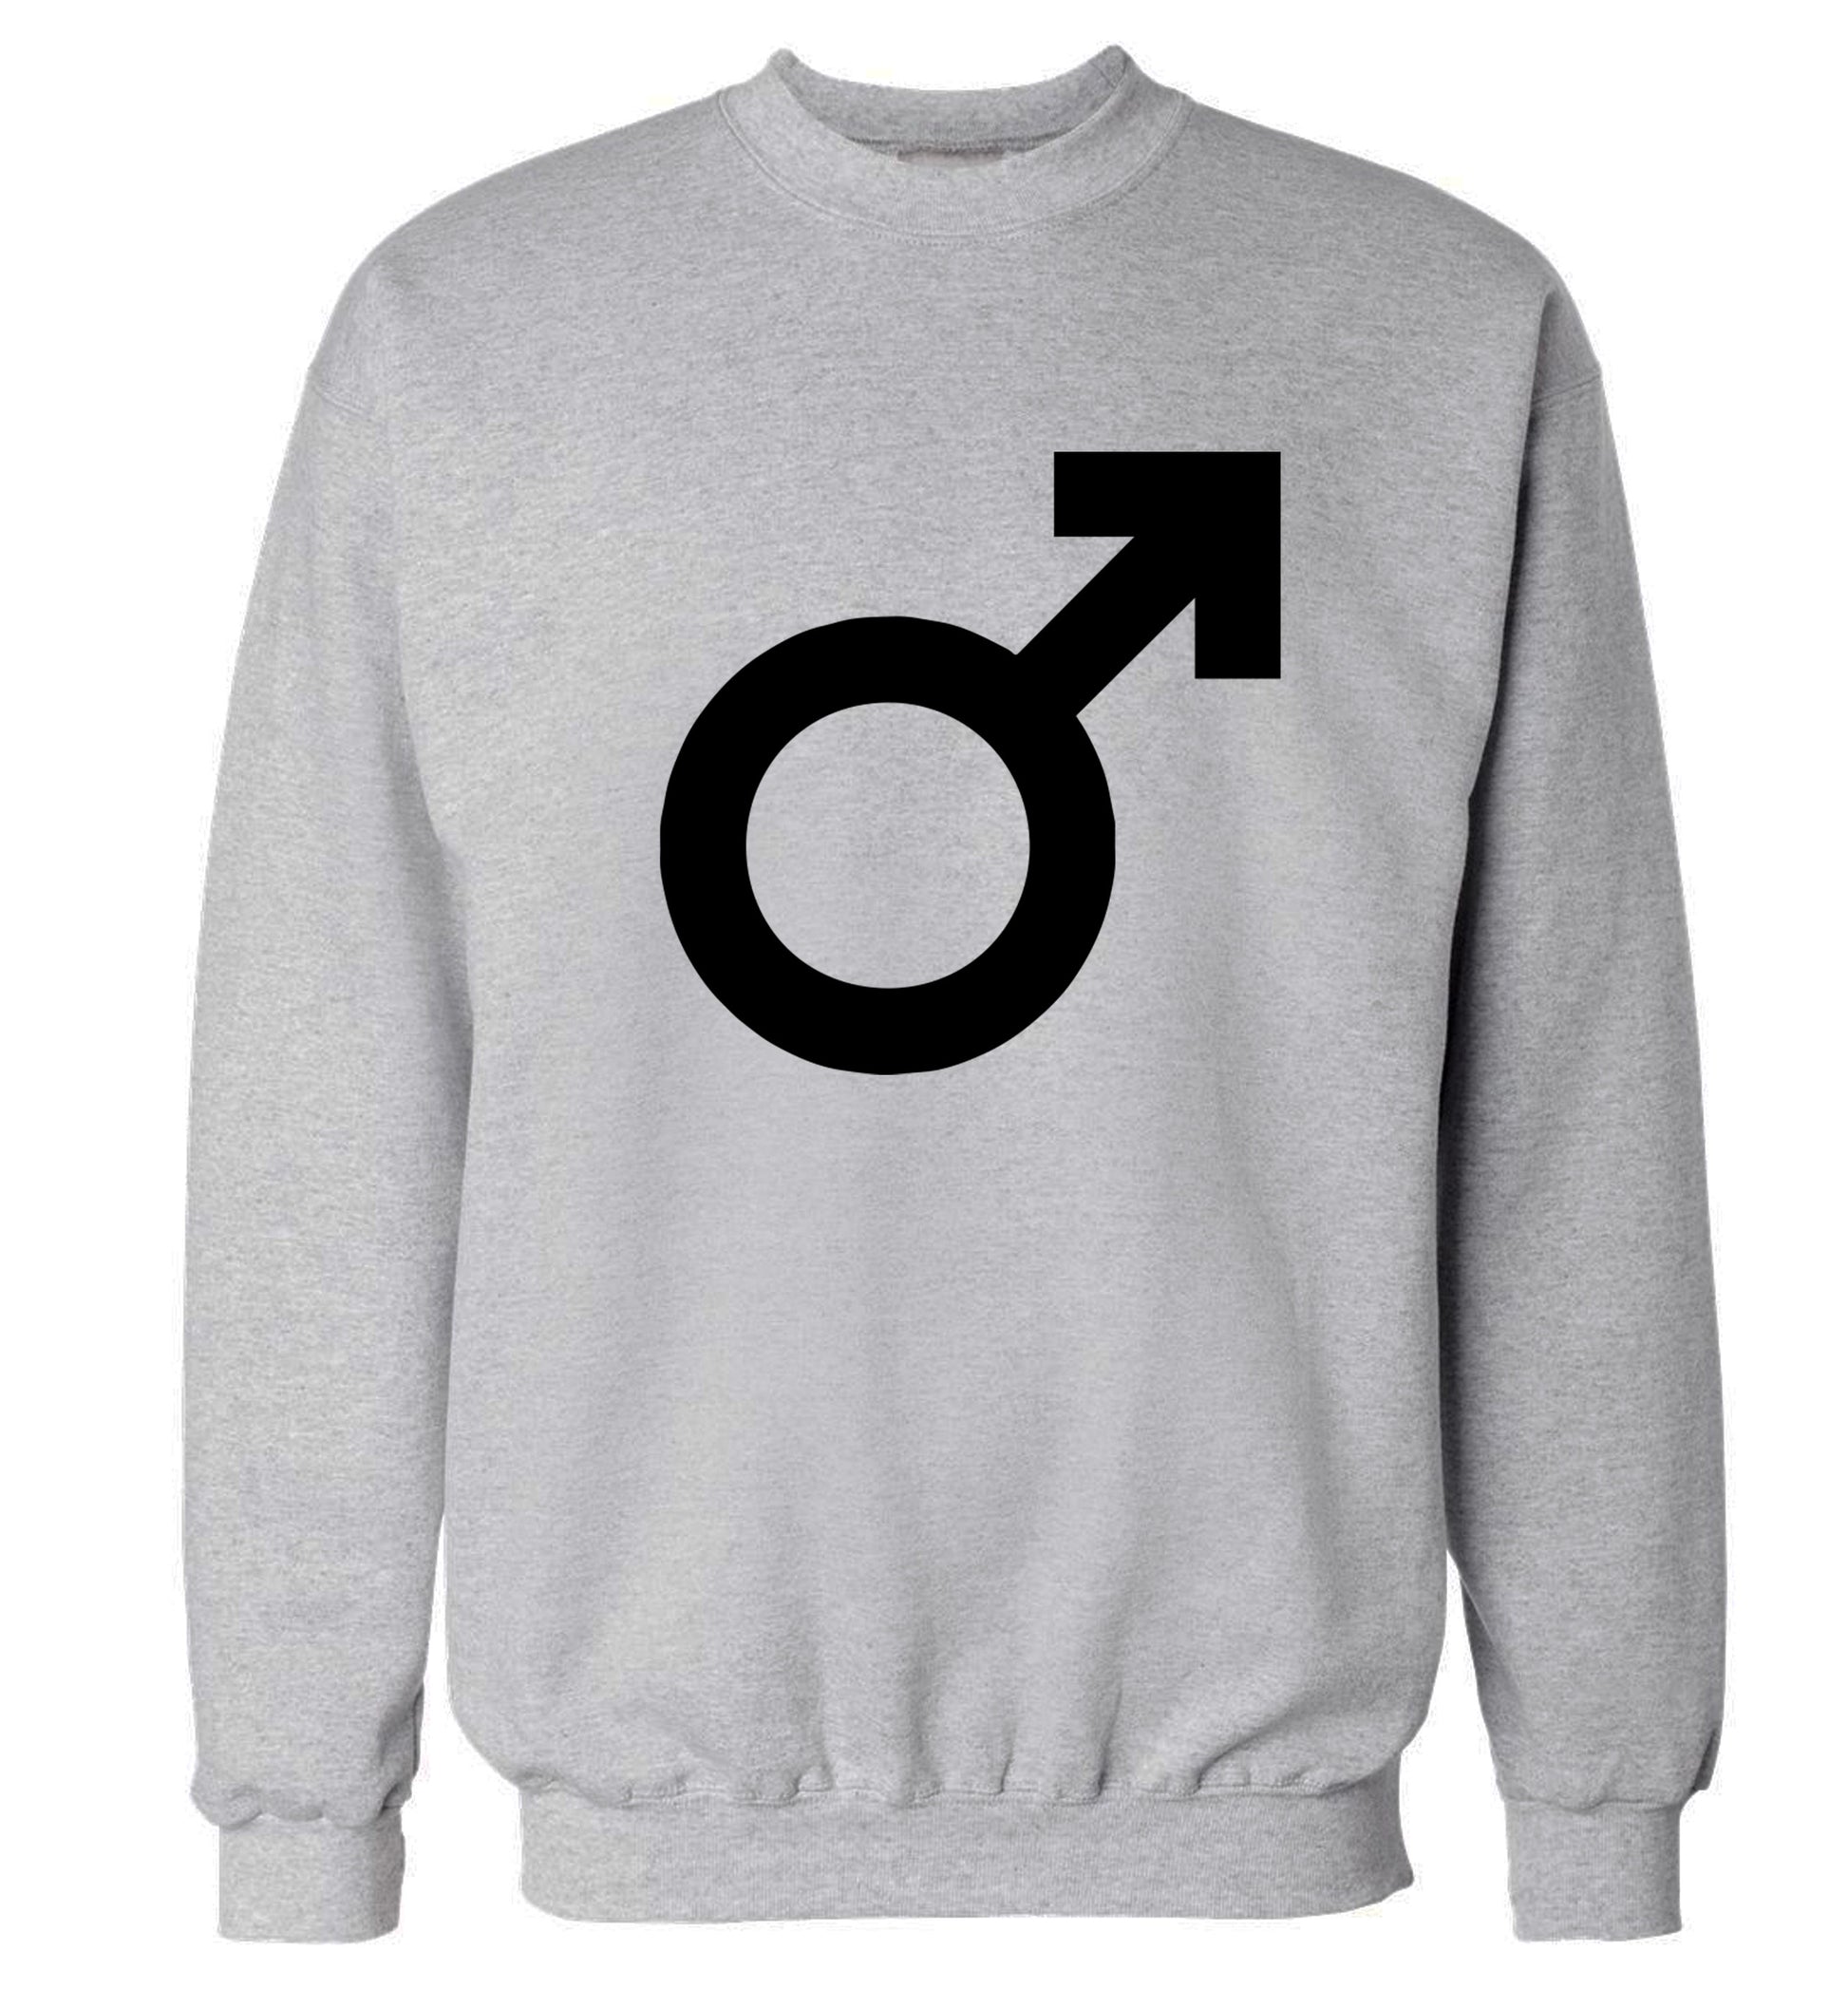 Male symbol large Adult's unisex grey Sweater 2XL